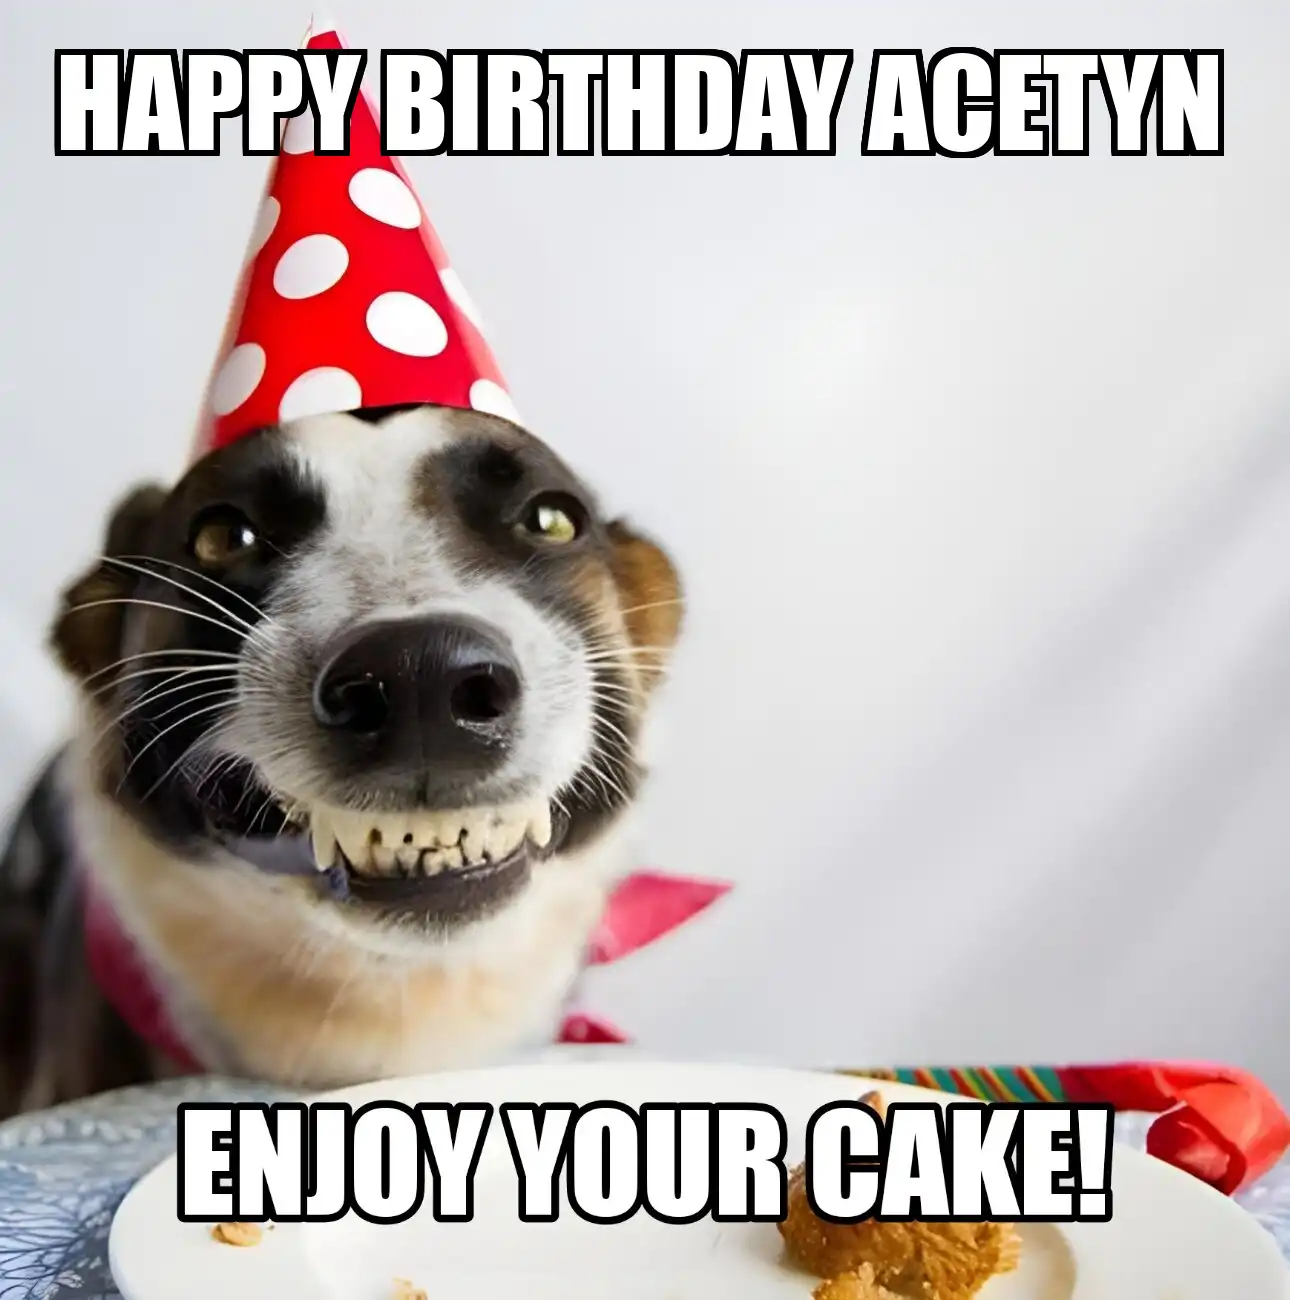 Happy Birthday Acetyn Enjoy Your Cake Dog Meme